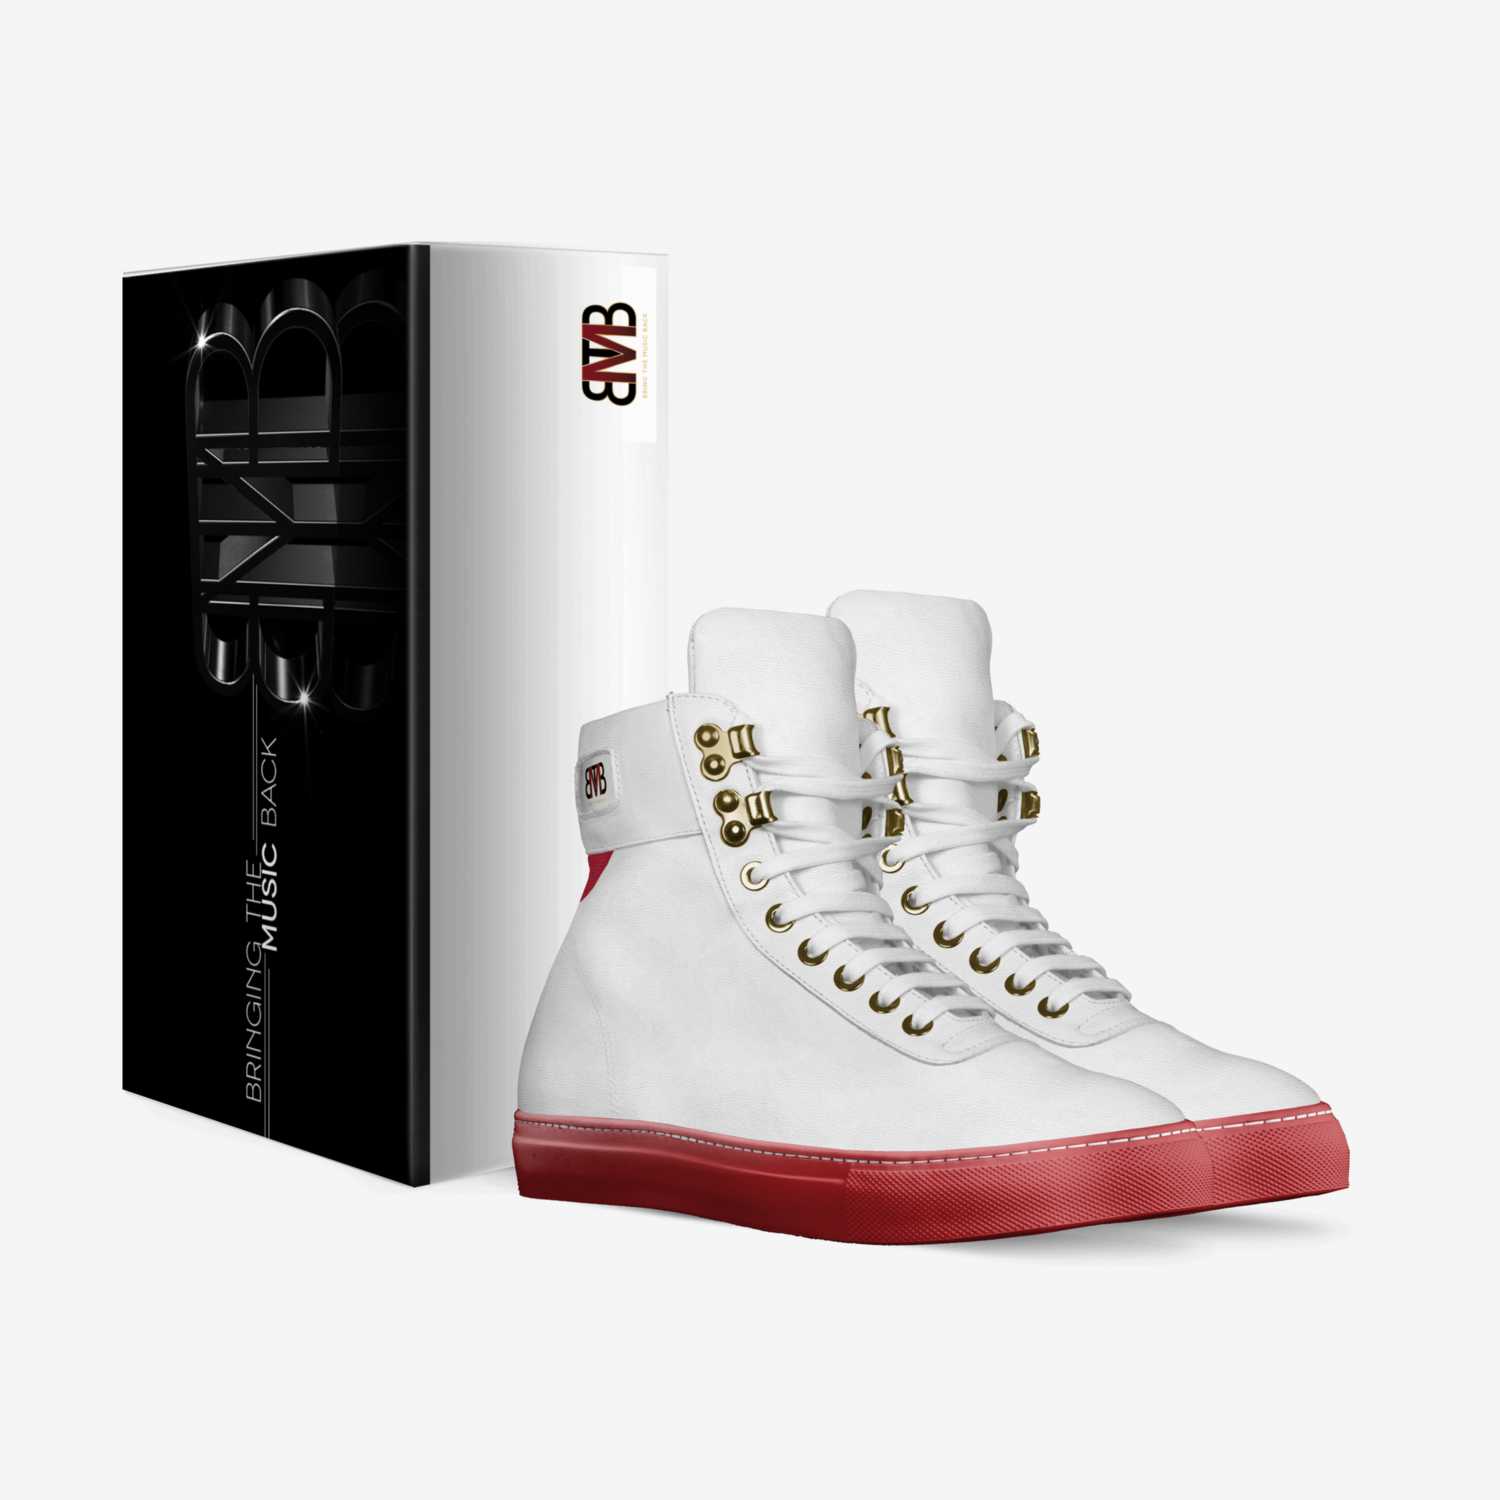 BTMB! custom made in Italy shoes by Rick Ward | Box view